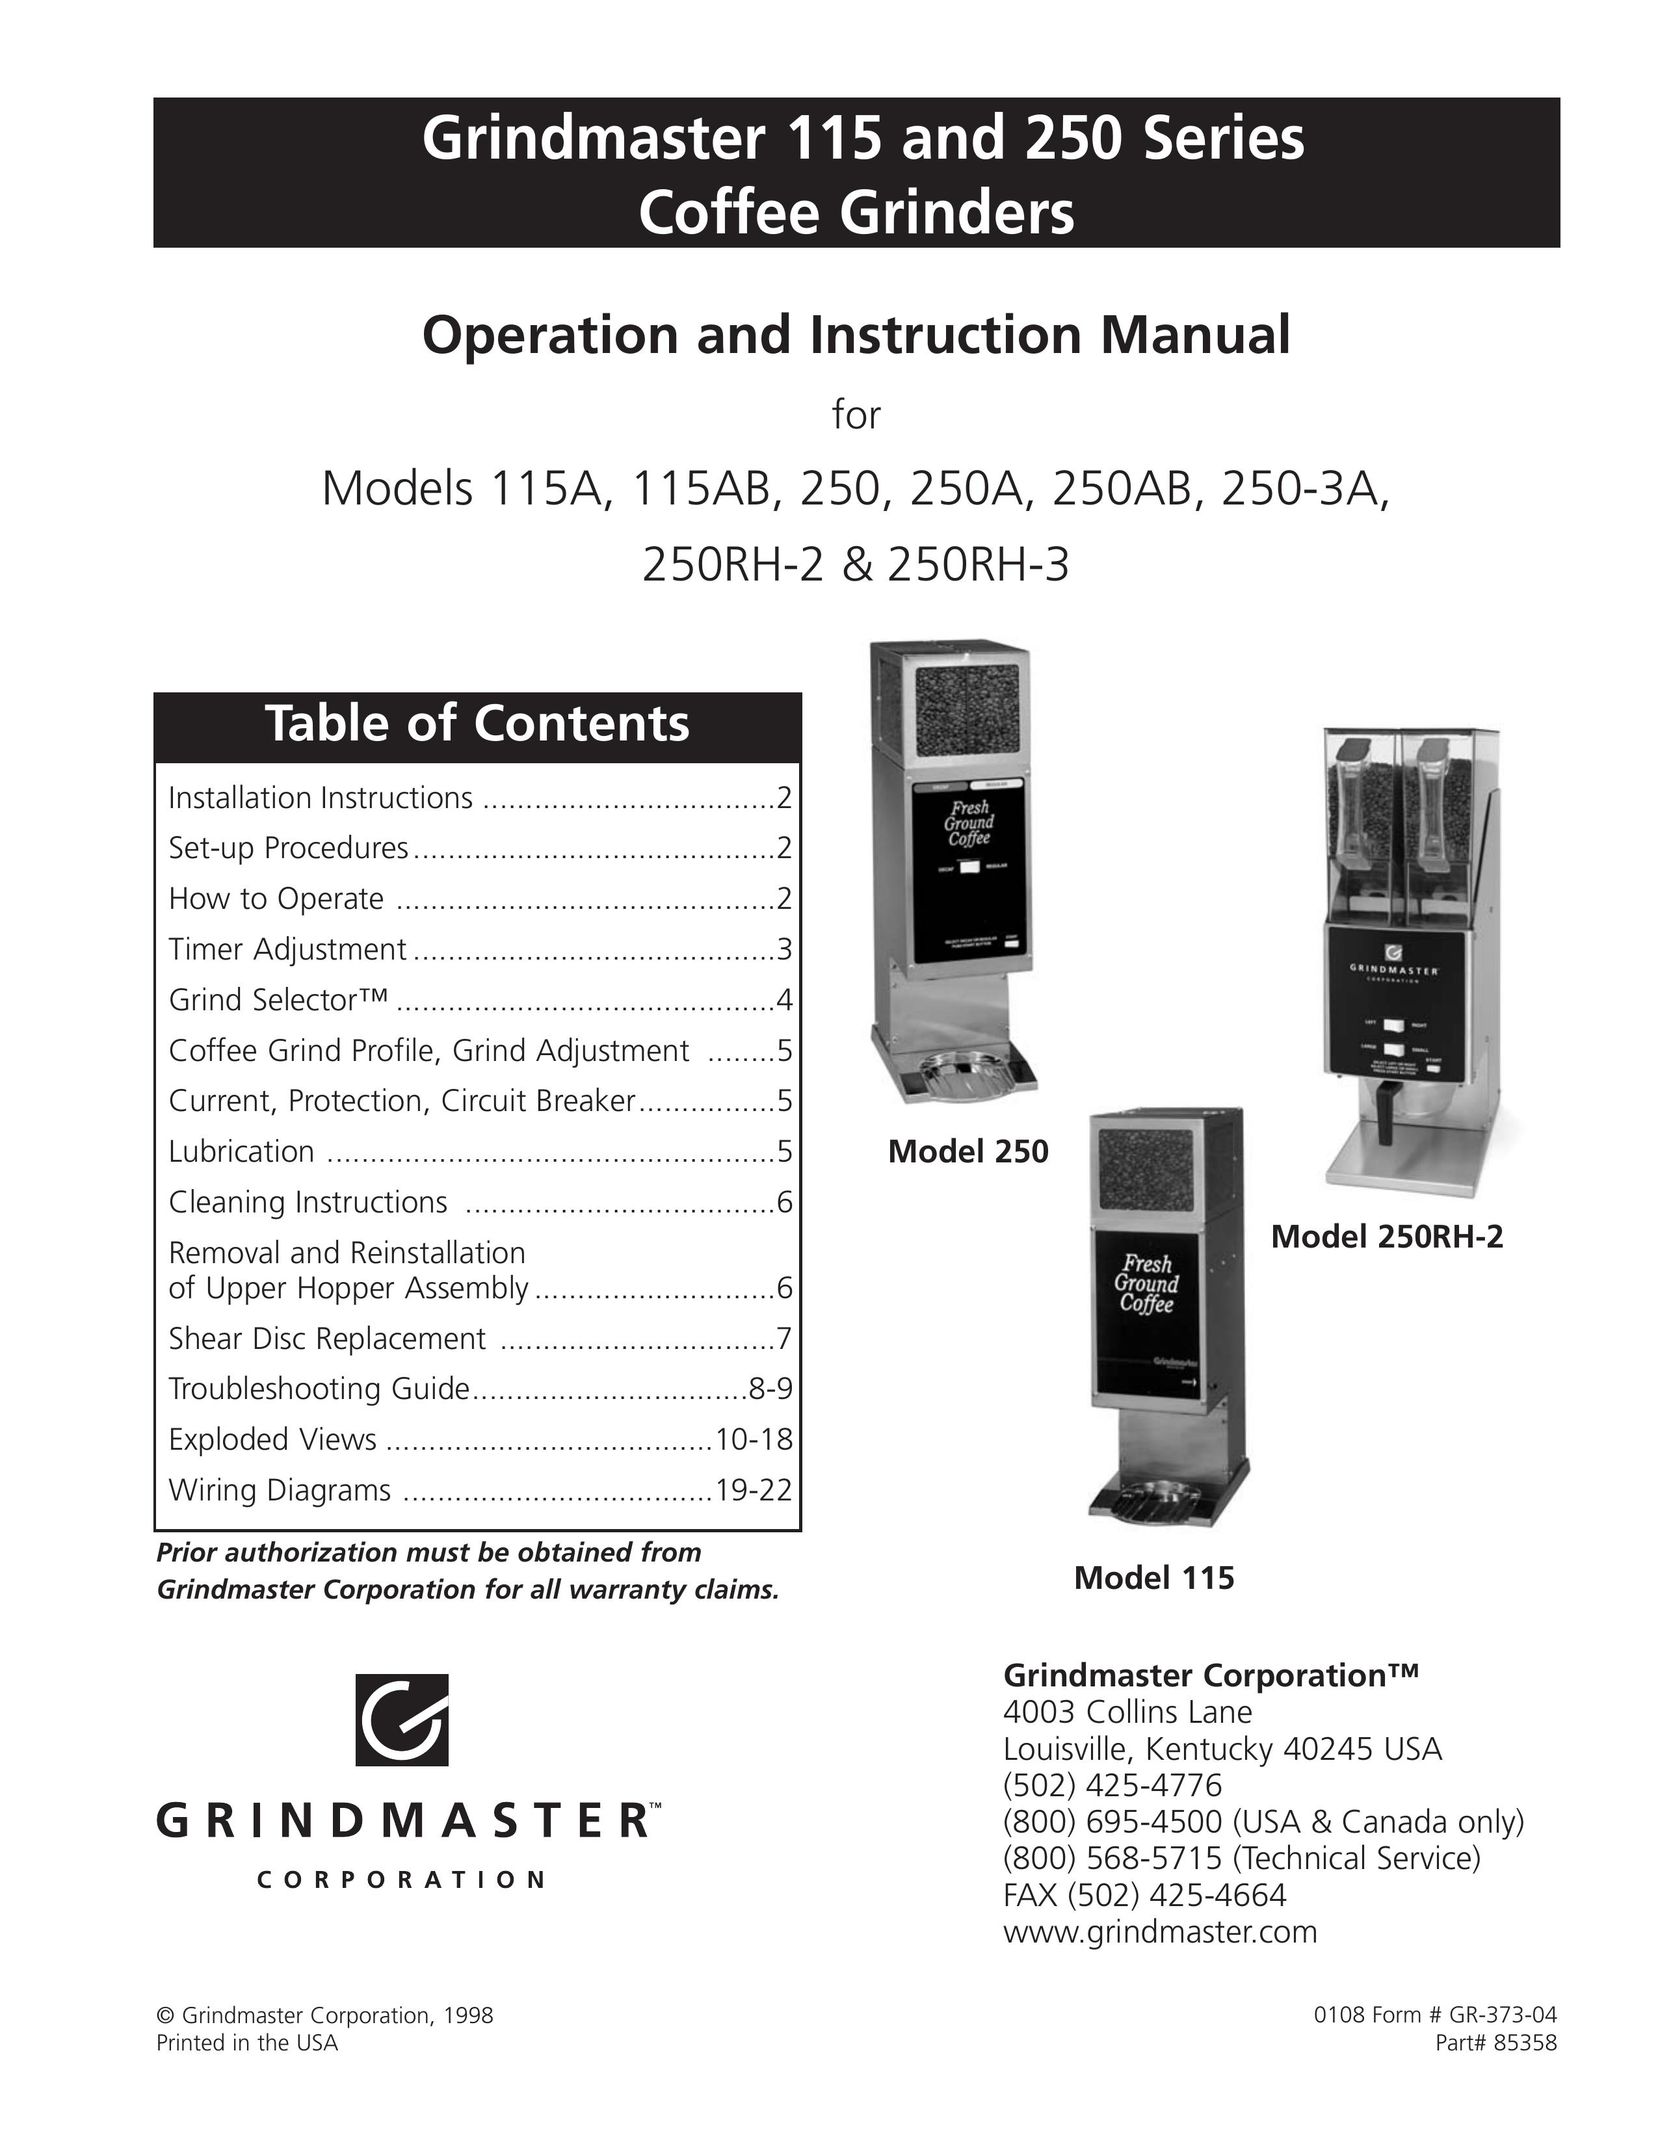 Grindmaster 250RH-2 Coffee Grinder User Manual